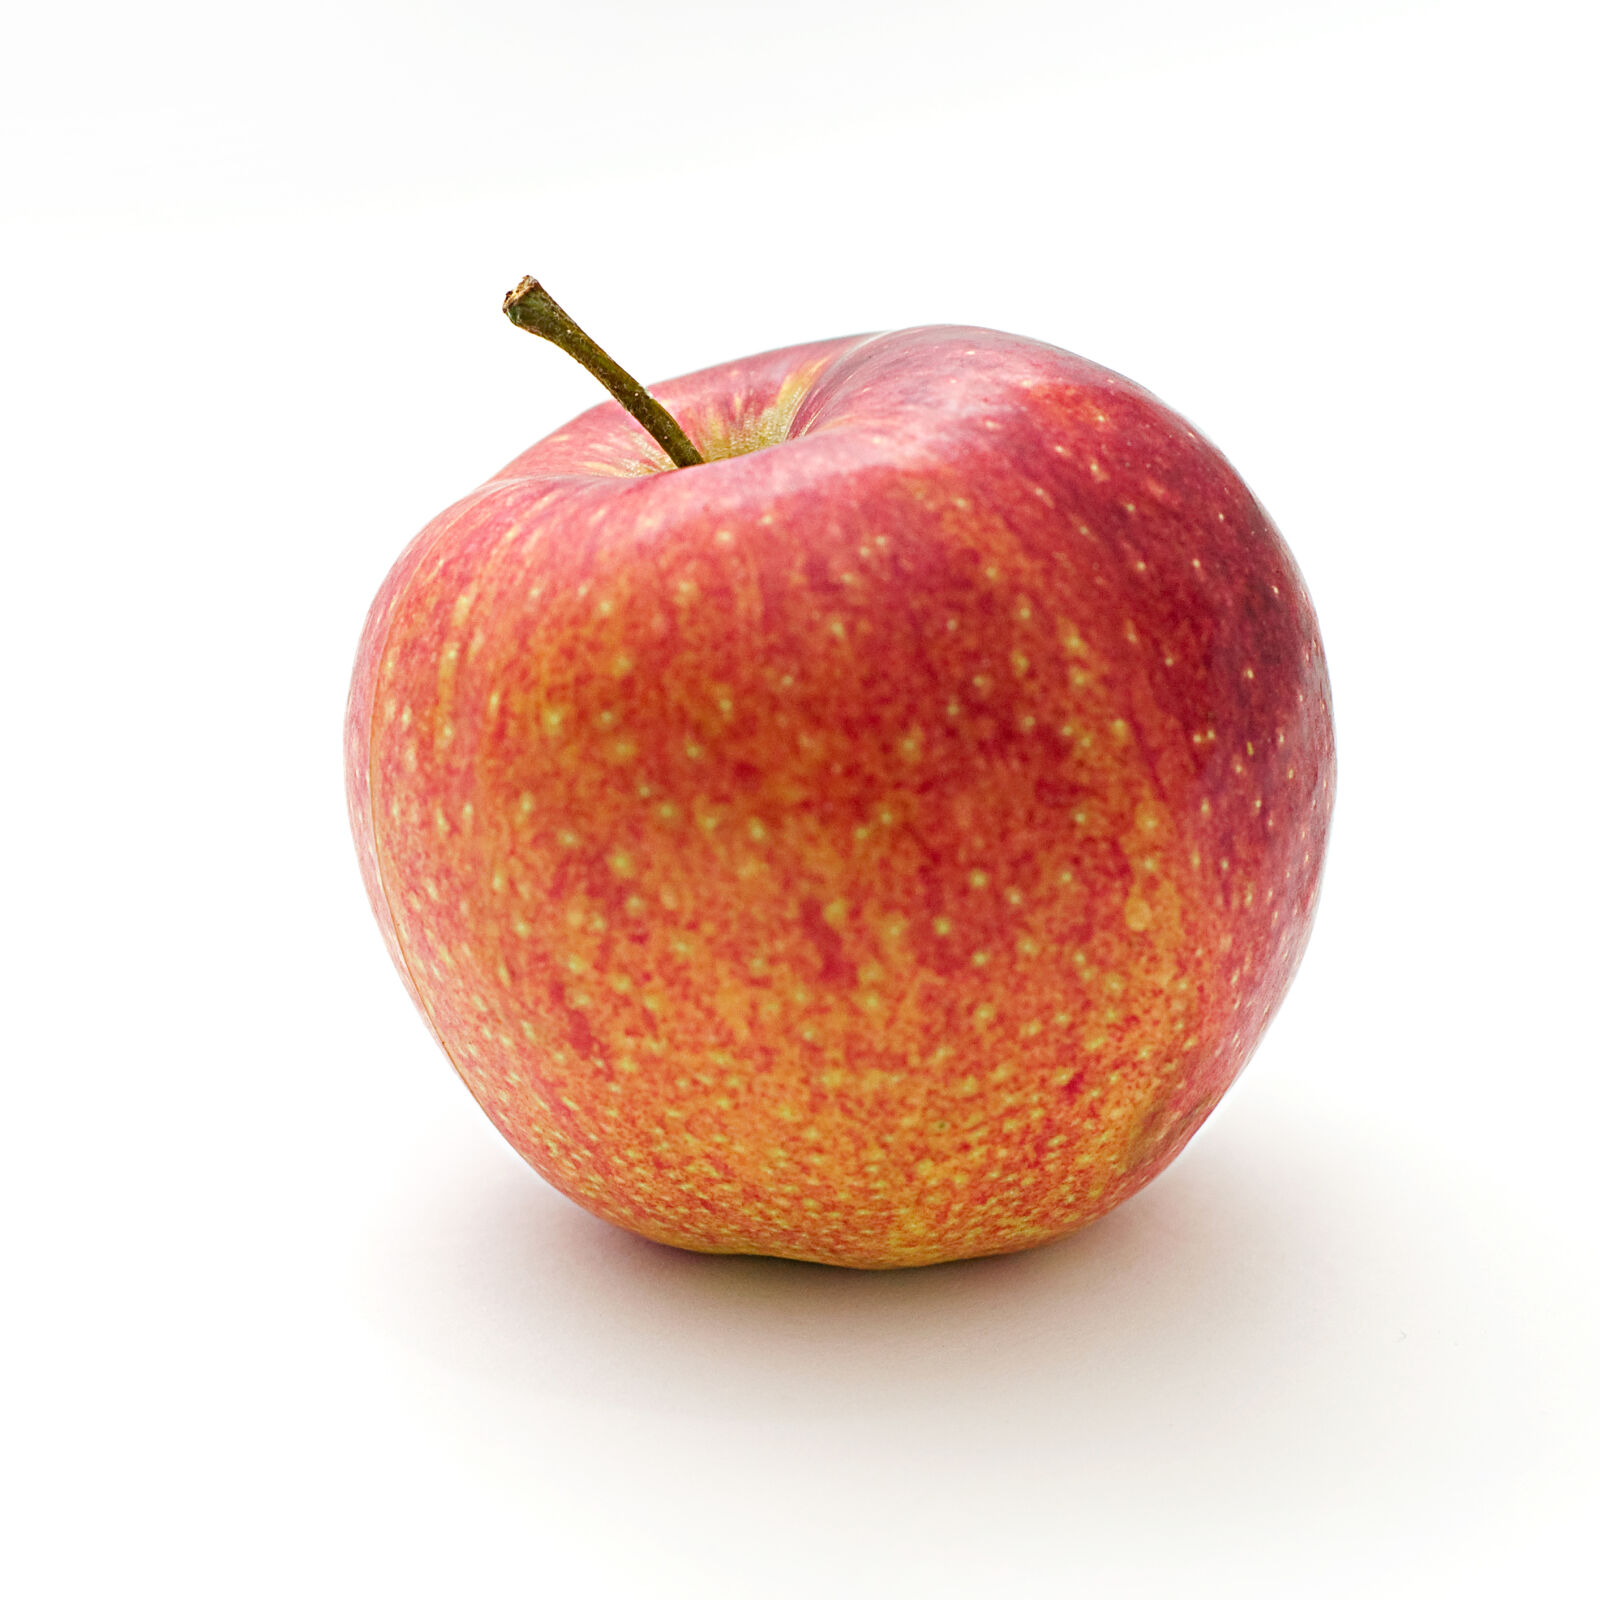 Nikon D90 sample photo. Healthy, apple, fruits, natural photography